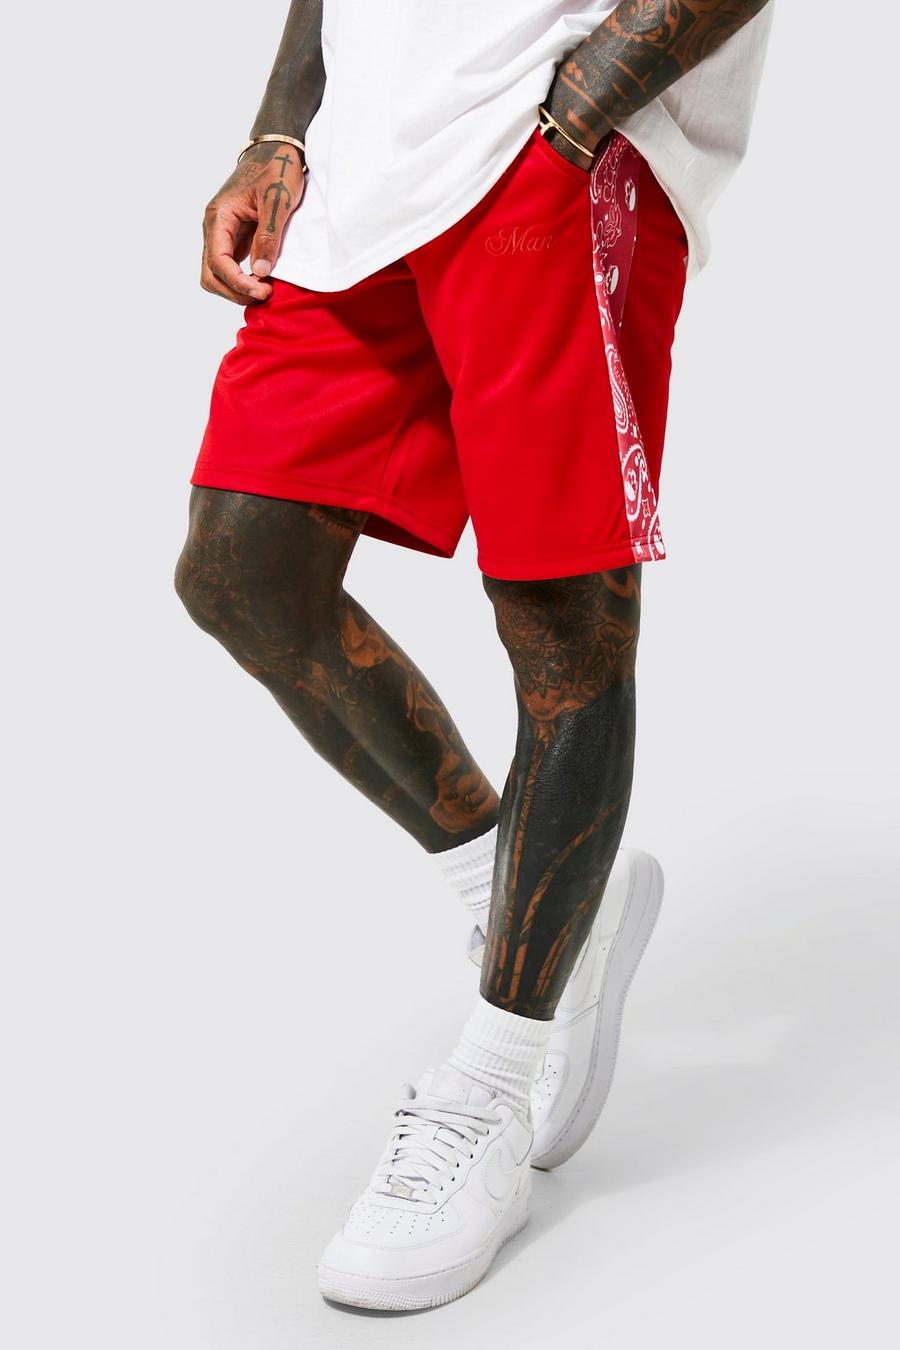 Pantalón corto MAN holgado con panel de tejido por urdimbre, Red rojo